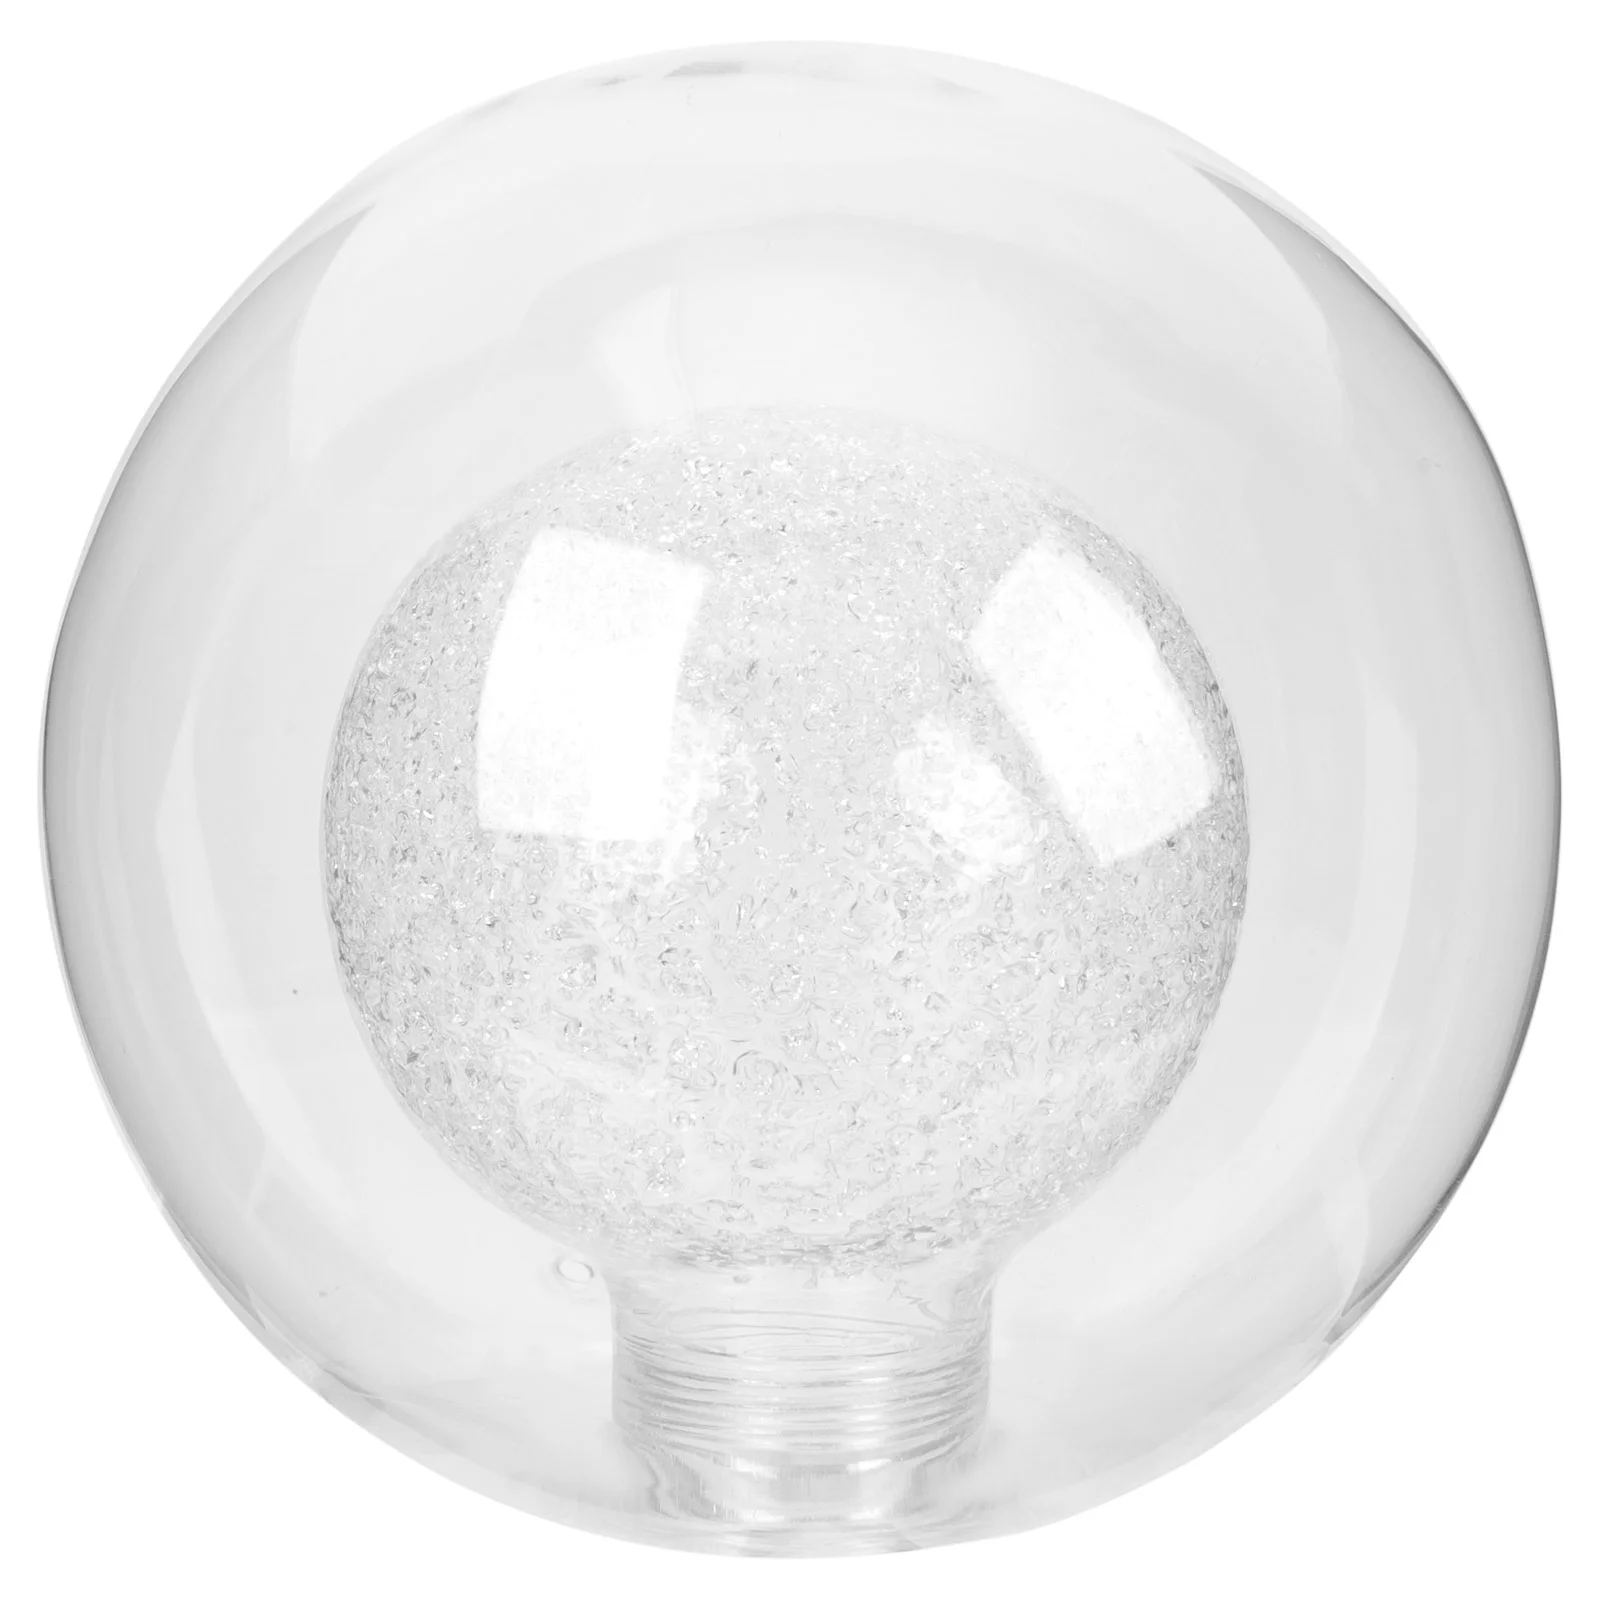 

Modern Lamp Shade G9 Light Socket 100mm Decorative Lampshade Lamp Shade Cover